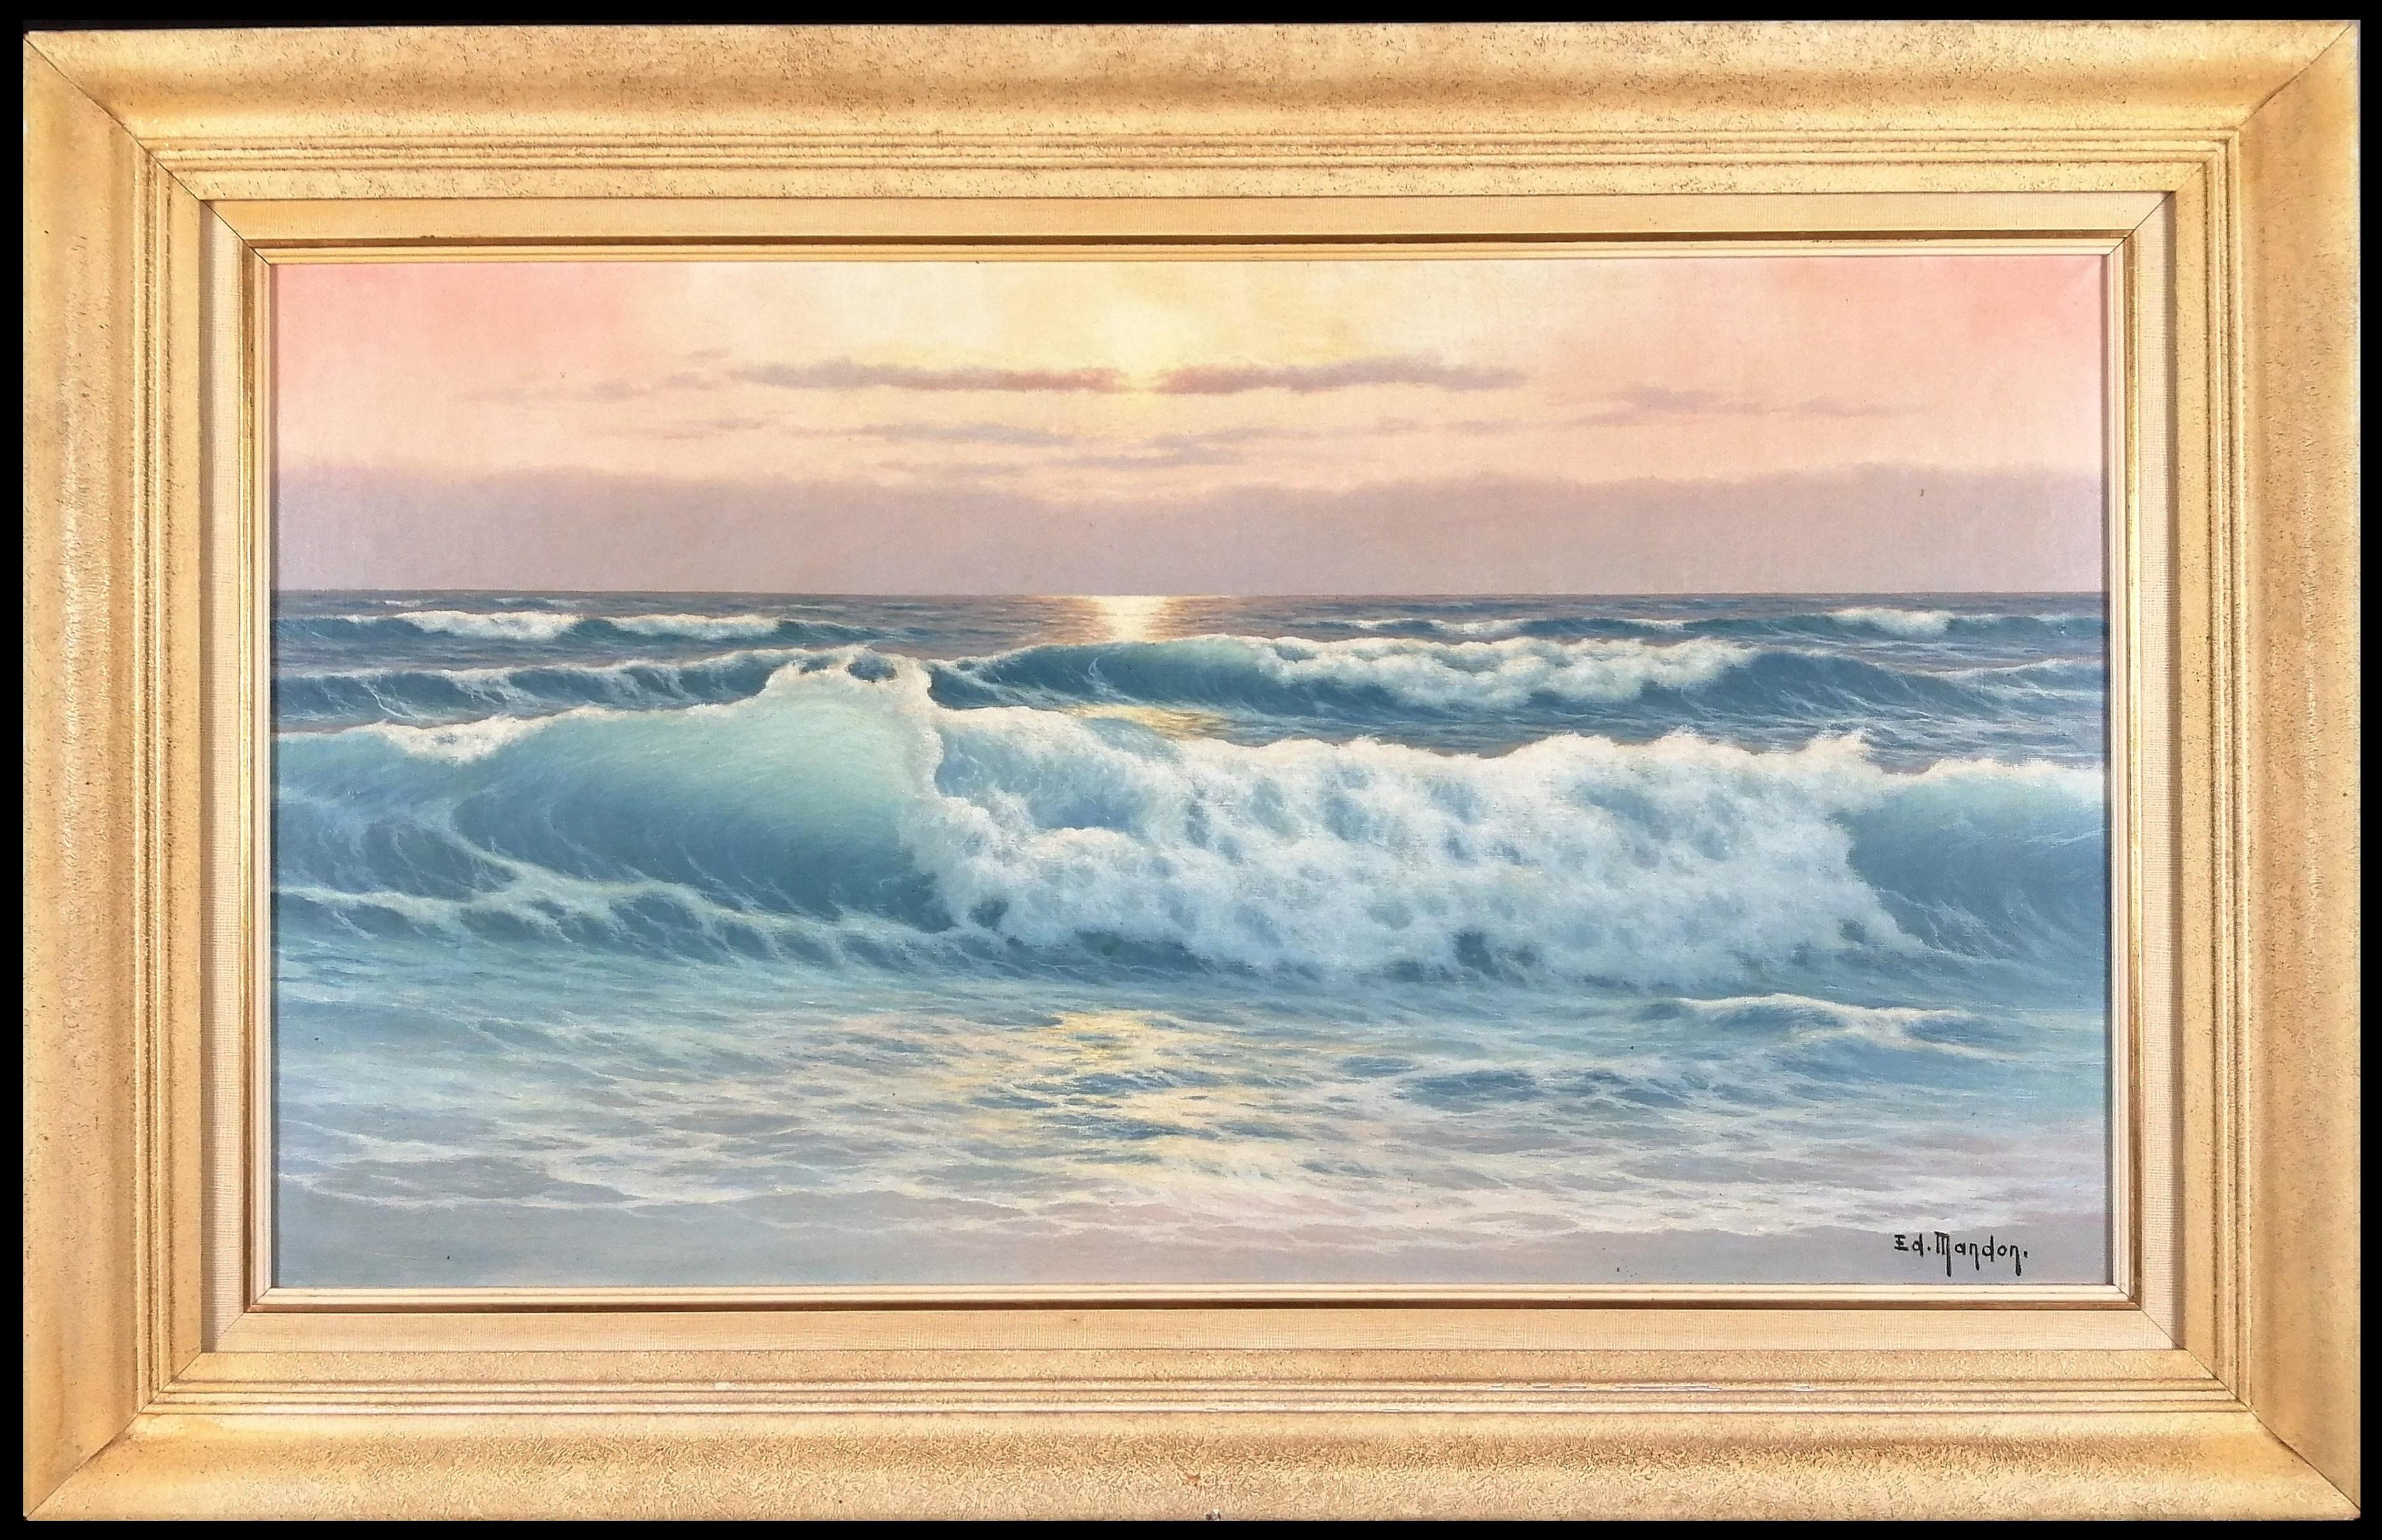 Edouard Mandon Landscape Painting – Sonnenuntergang an der See - Große französische Meeres- Strand- Meereslandschaft Öl auf Leinwand Gemälde